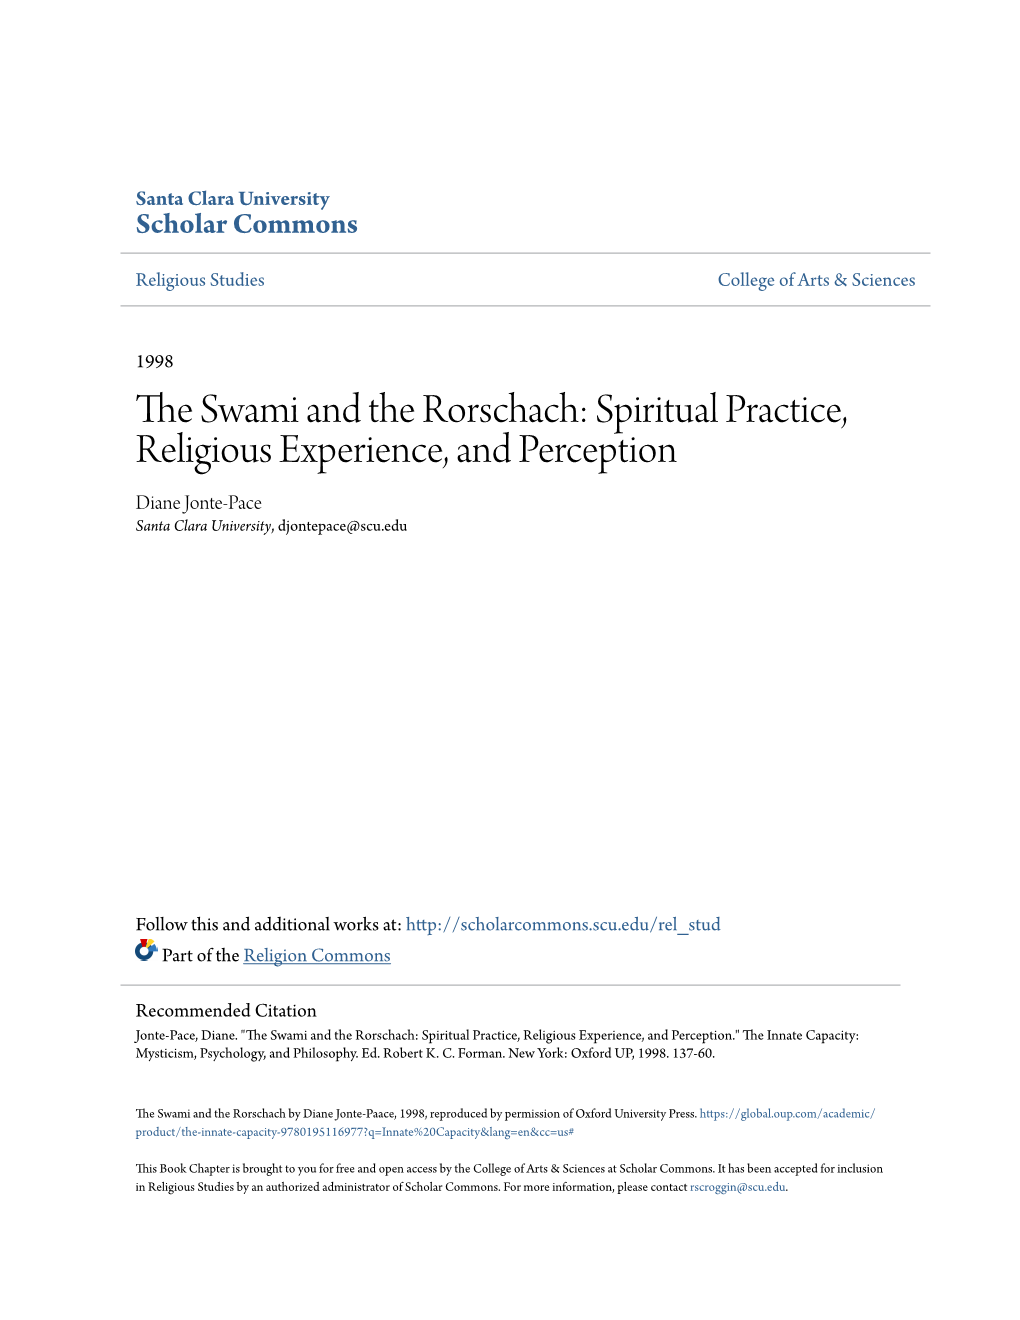 The Swami and the Rorschach: Spiritual Practice, Religious